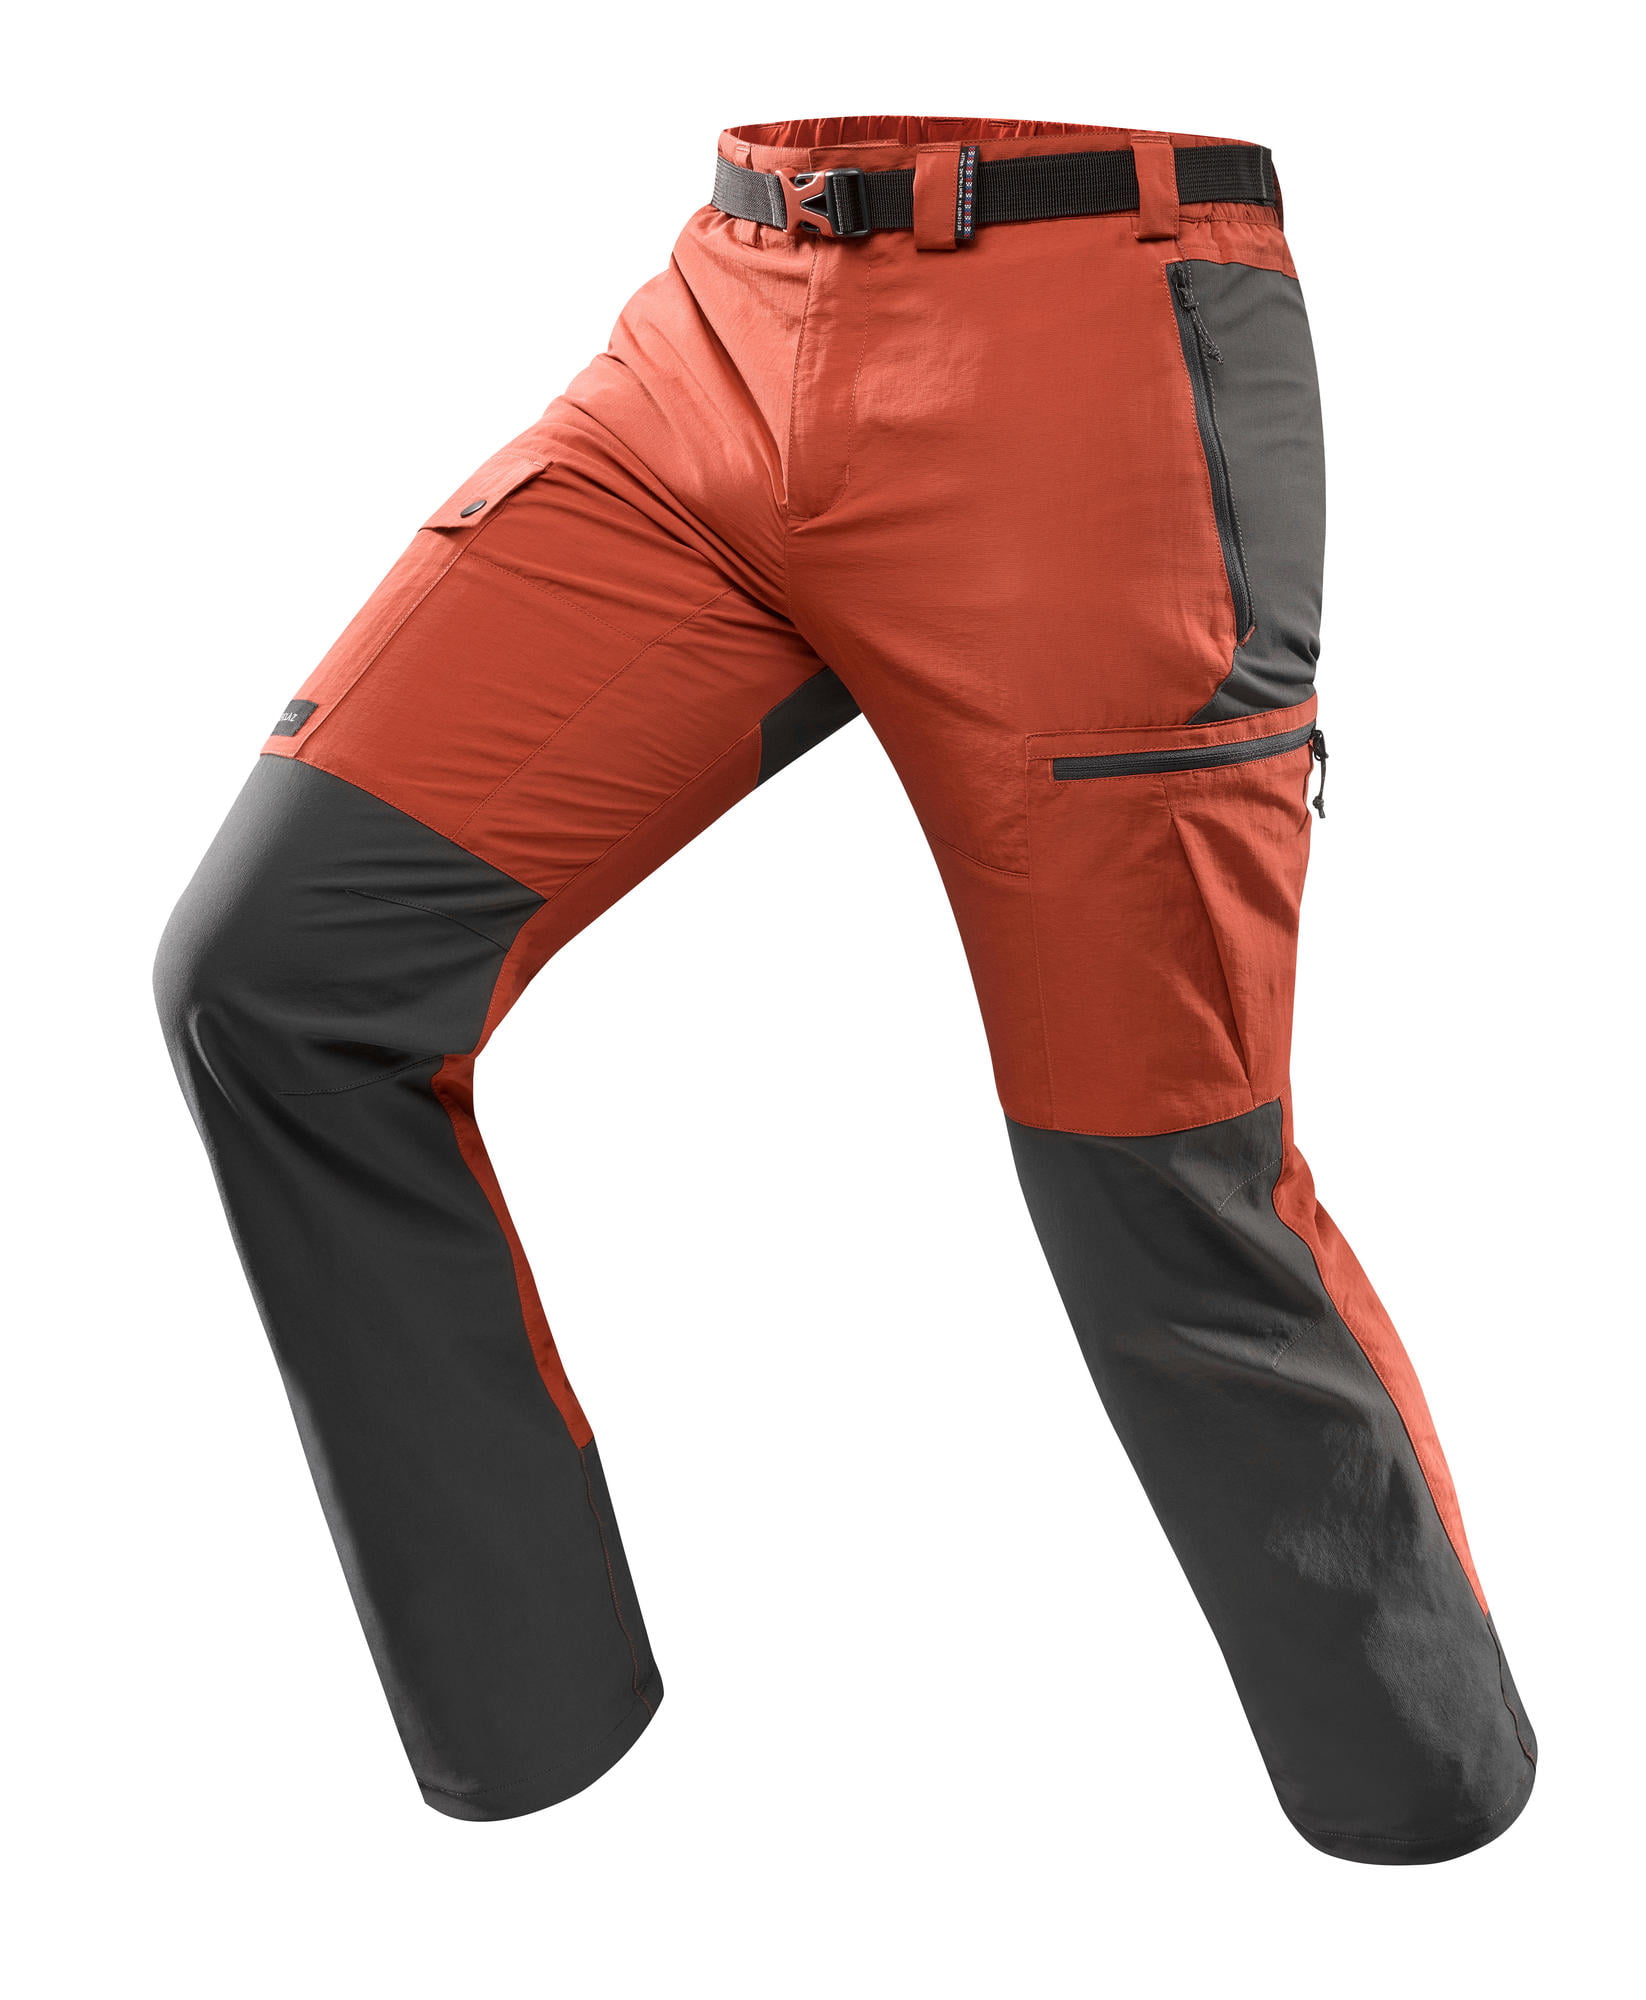 decathlon combat trousers